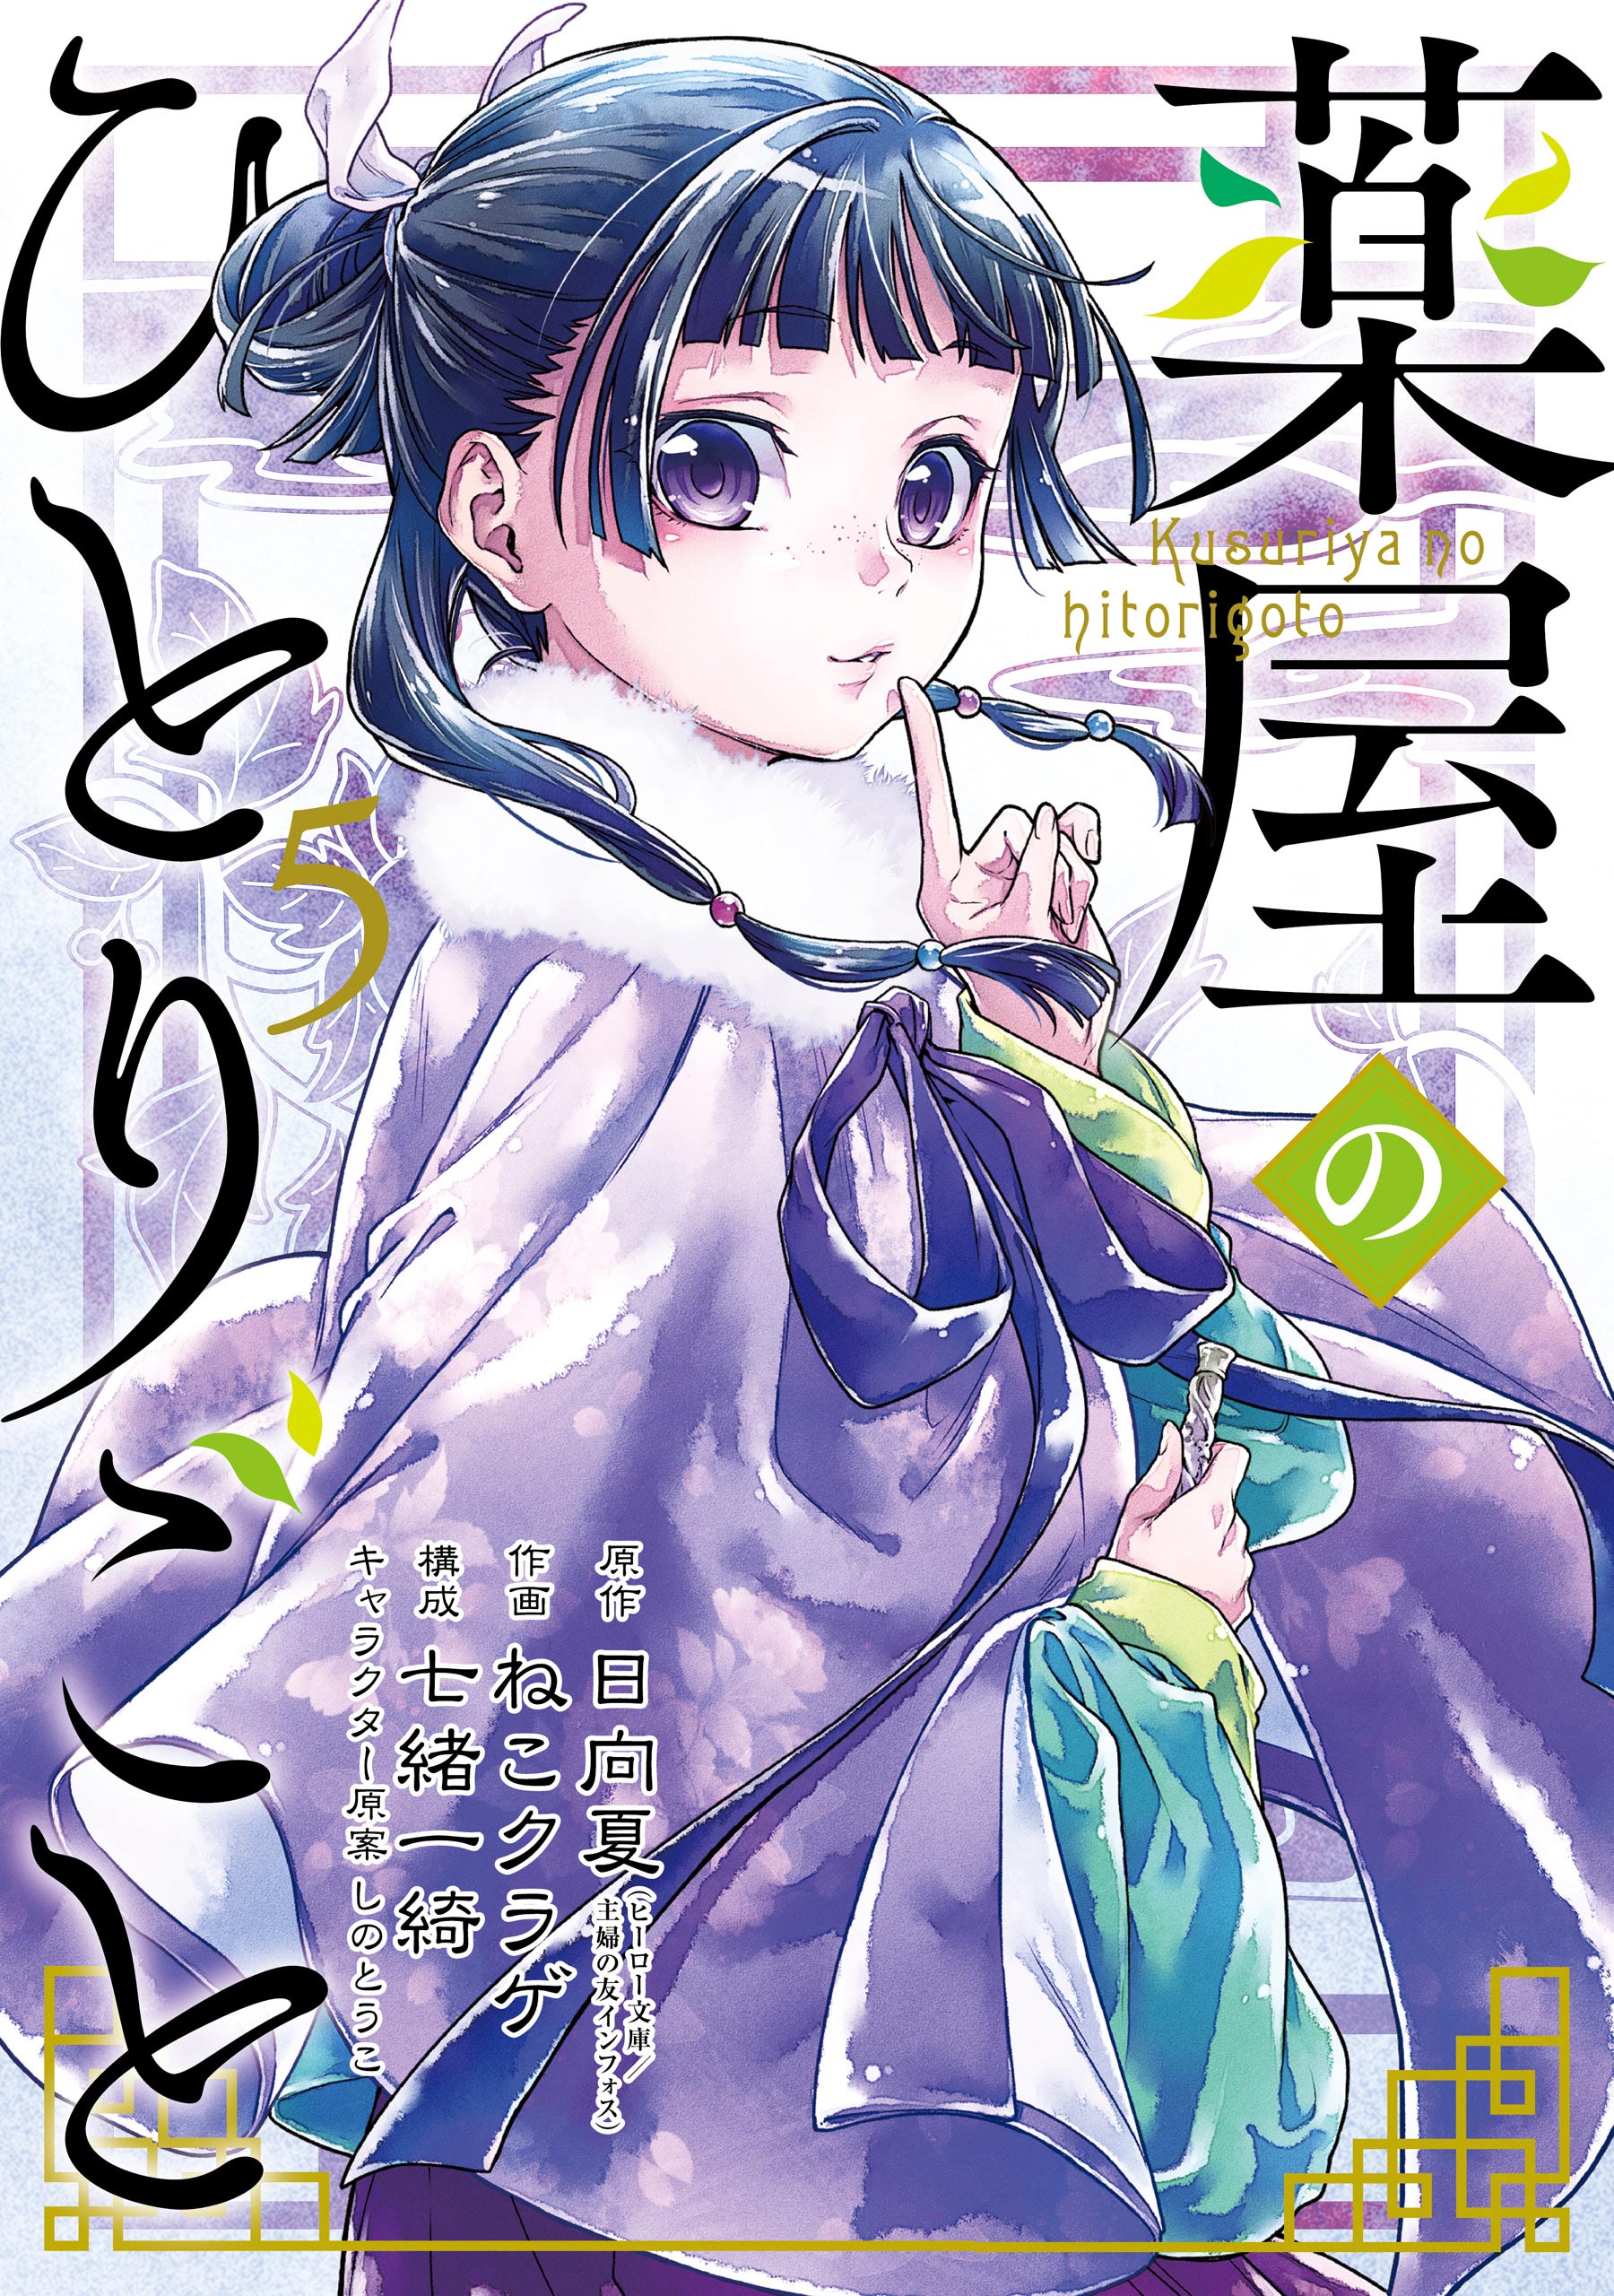 Kusuriya no Hitorigoto Manga